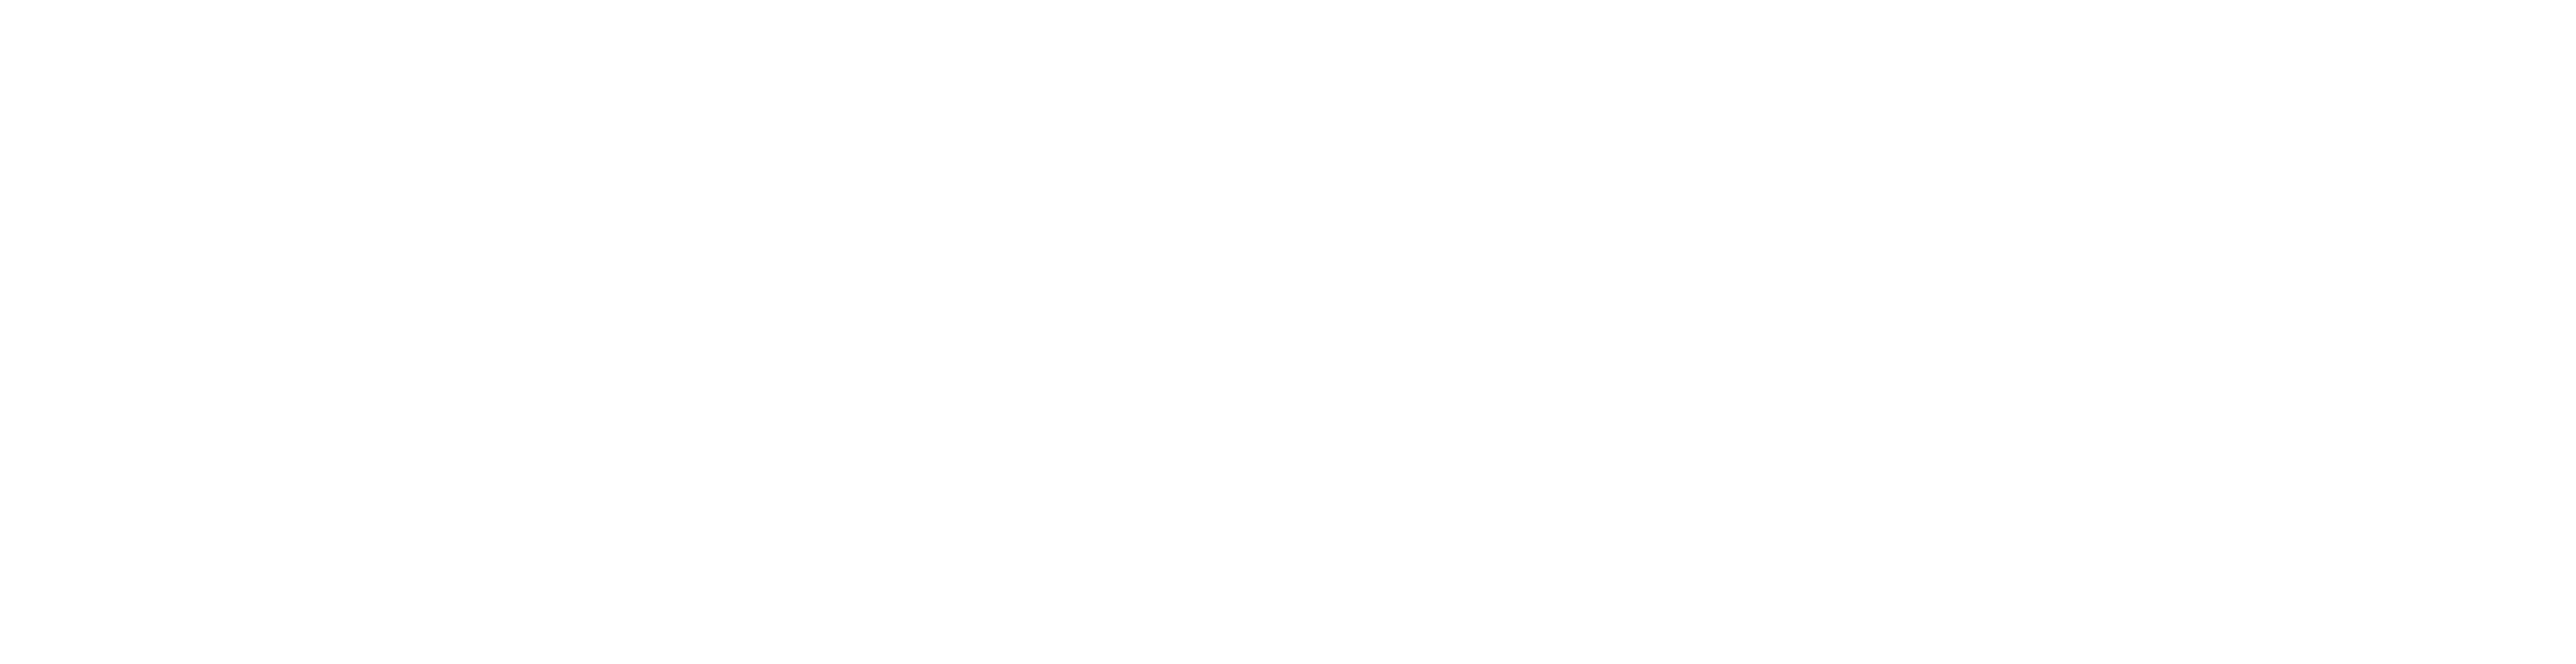 Lokasoka Logo